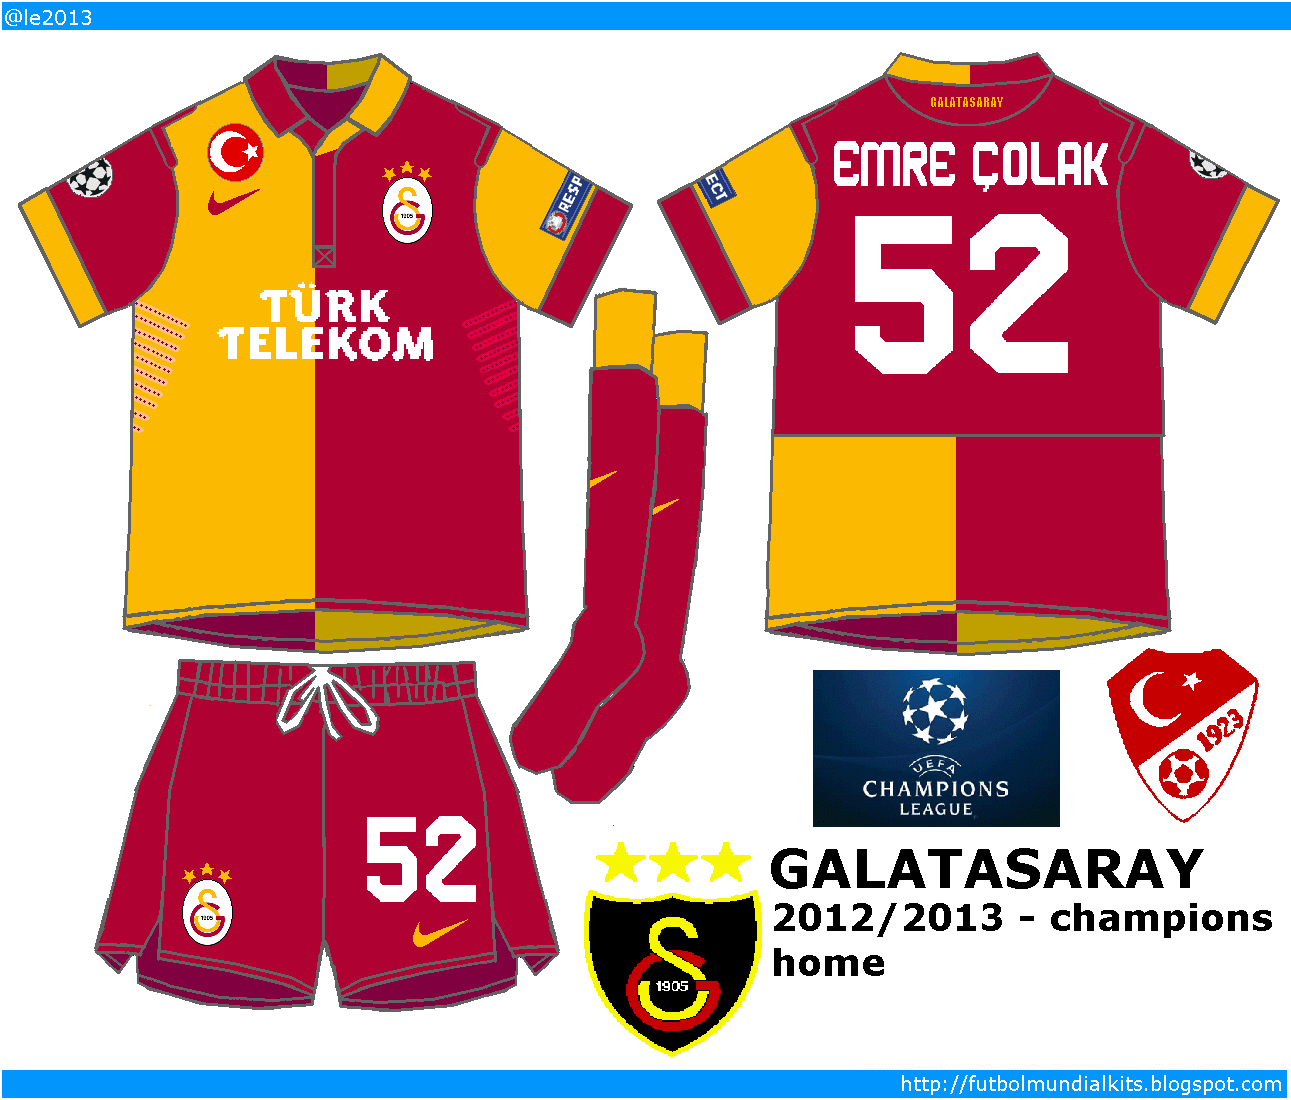 Fútbol Mundial Kits - Uruguay: Galatasaray S. K. - 2012/2013 (champions